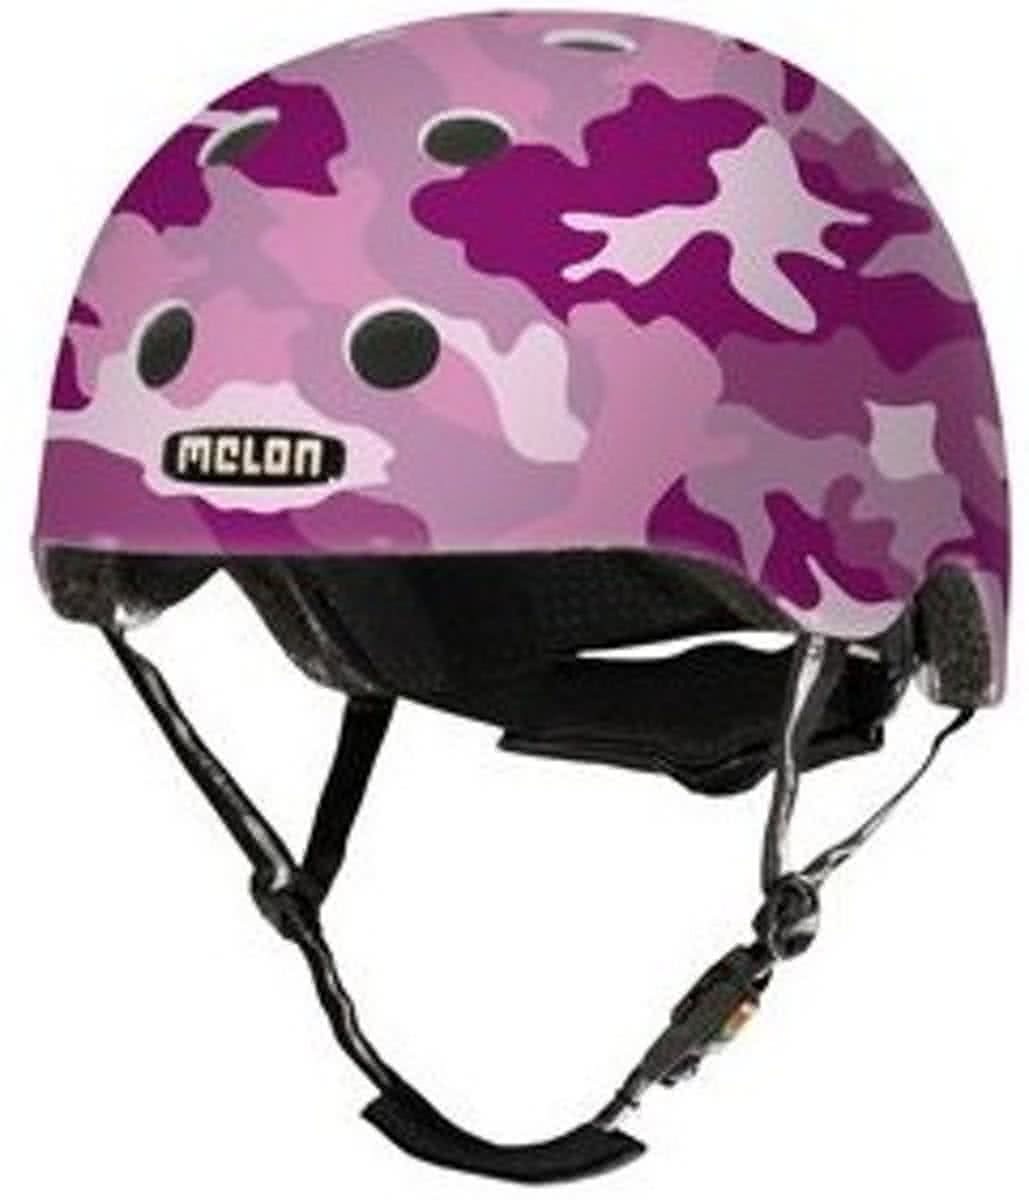 Melon Helm Camouflage Pink XL-2XL 58-63cm roze